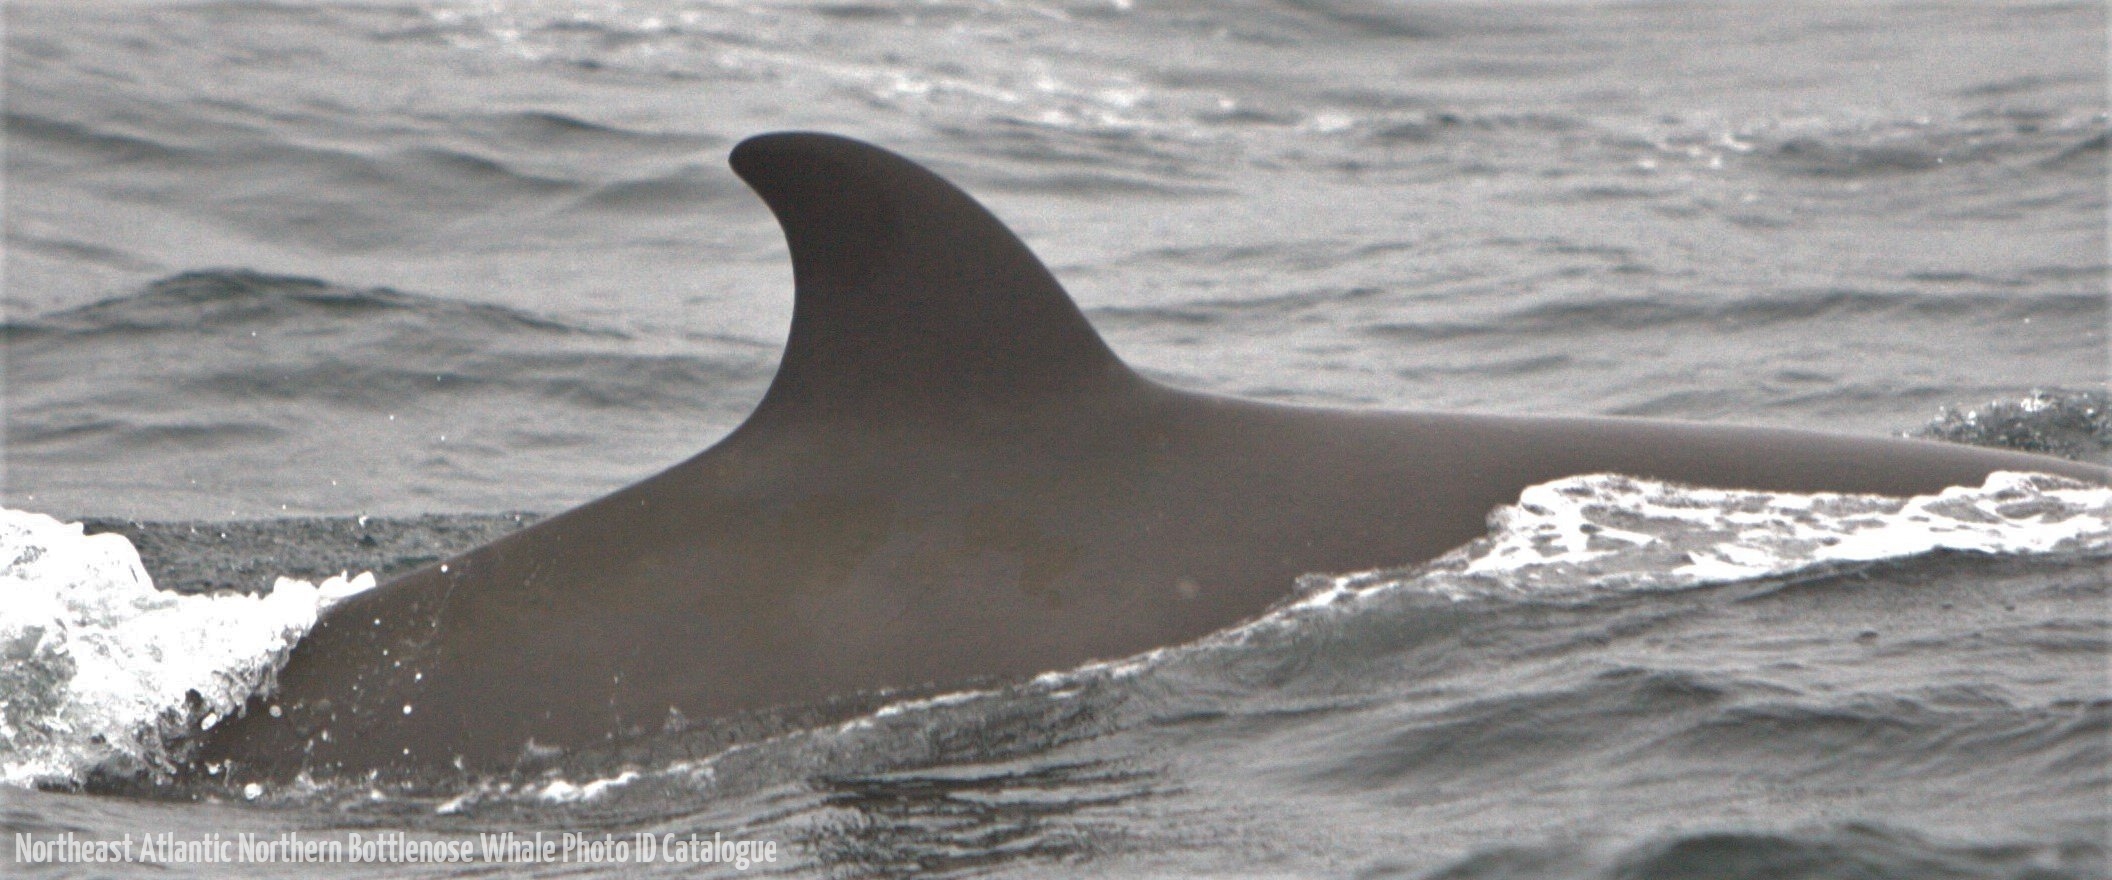 Whale ID: 0328,  Date taken: 20-06-2015,  Photographer: Hannah Wood